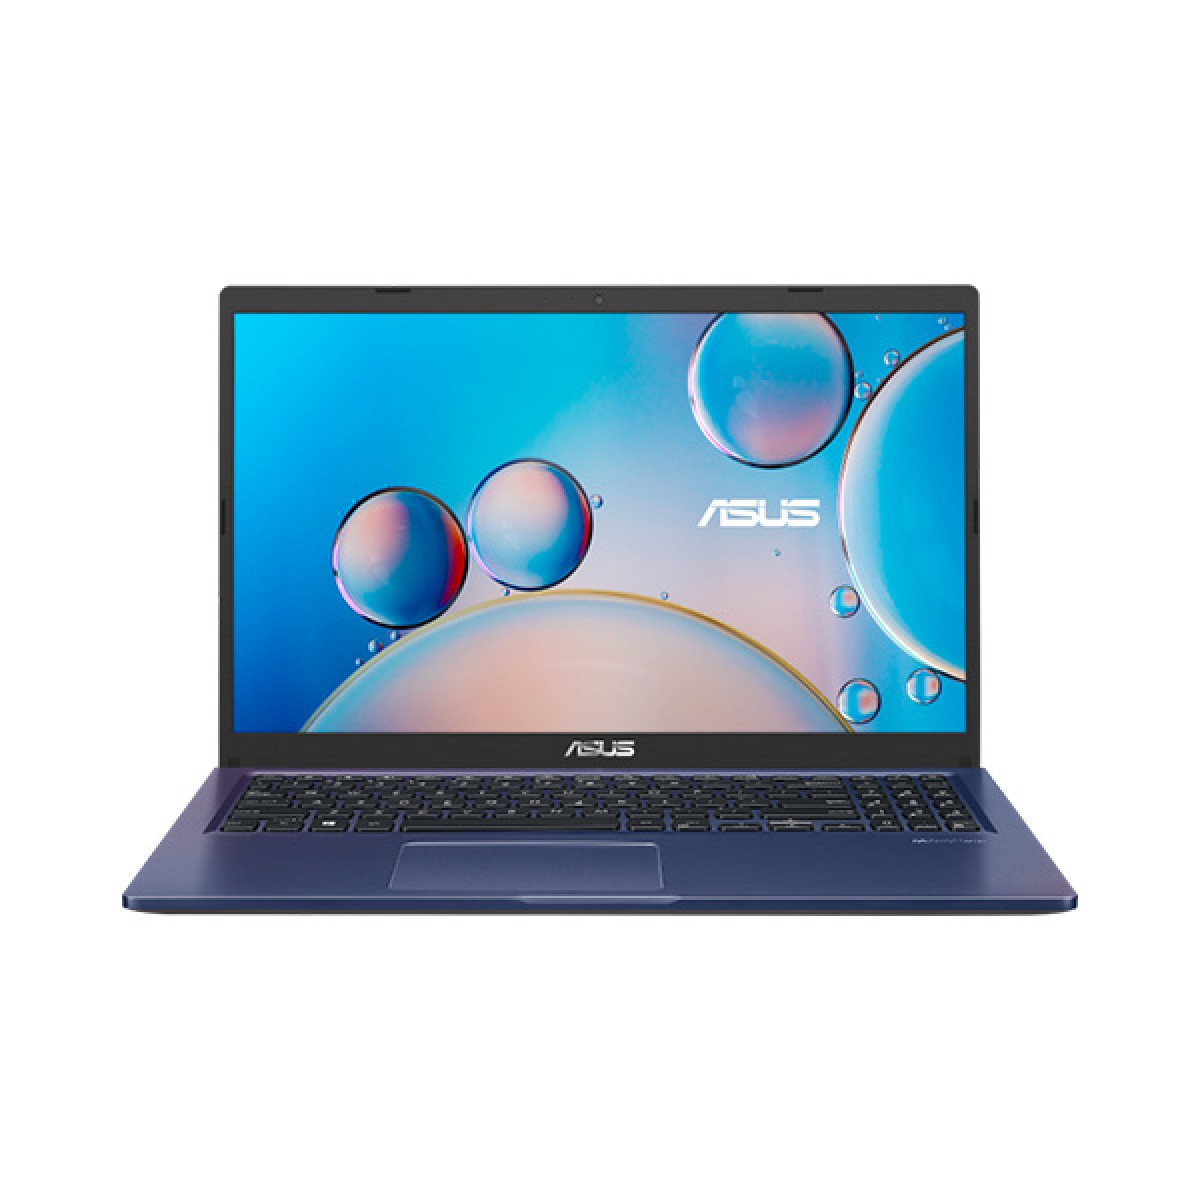 Asus Vivobook 15 X515ea Core I5 Peacock Blue Laptop Price In Bd